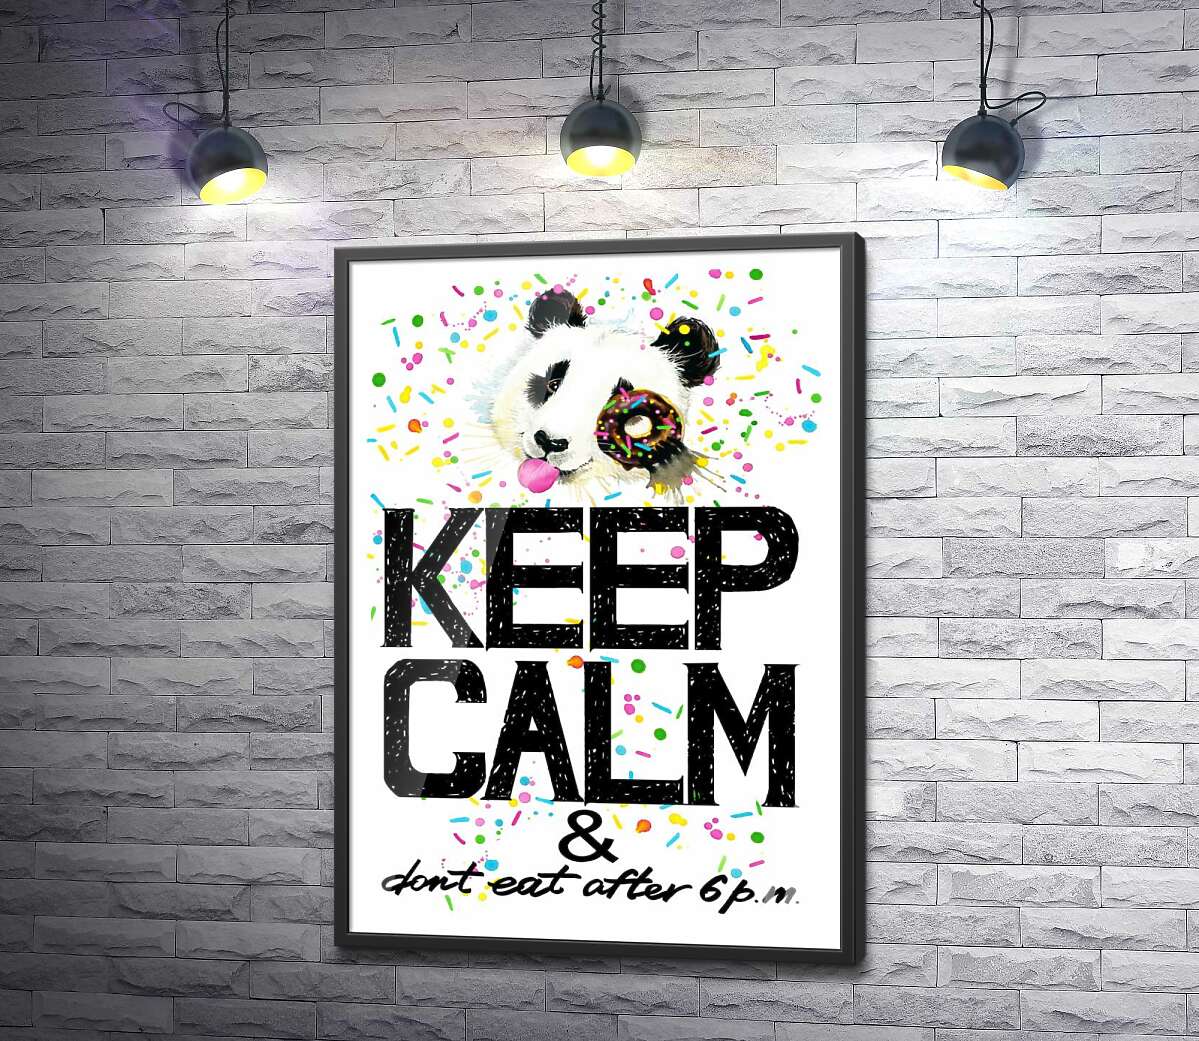 постер Панда с мягким донатсом над надписью "keep calm and don't eat after 6 p.m."